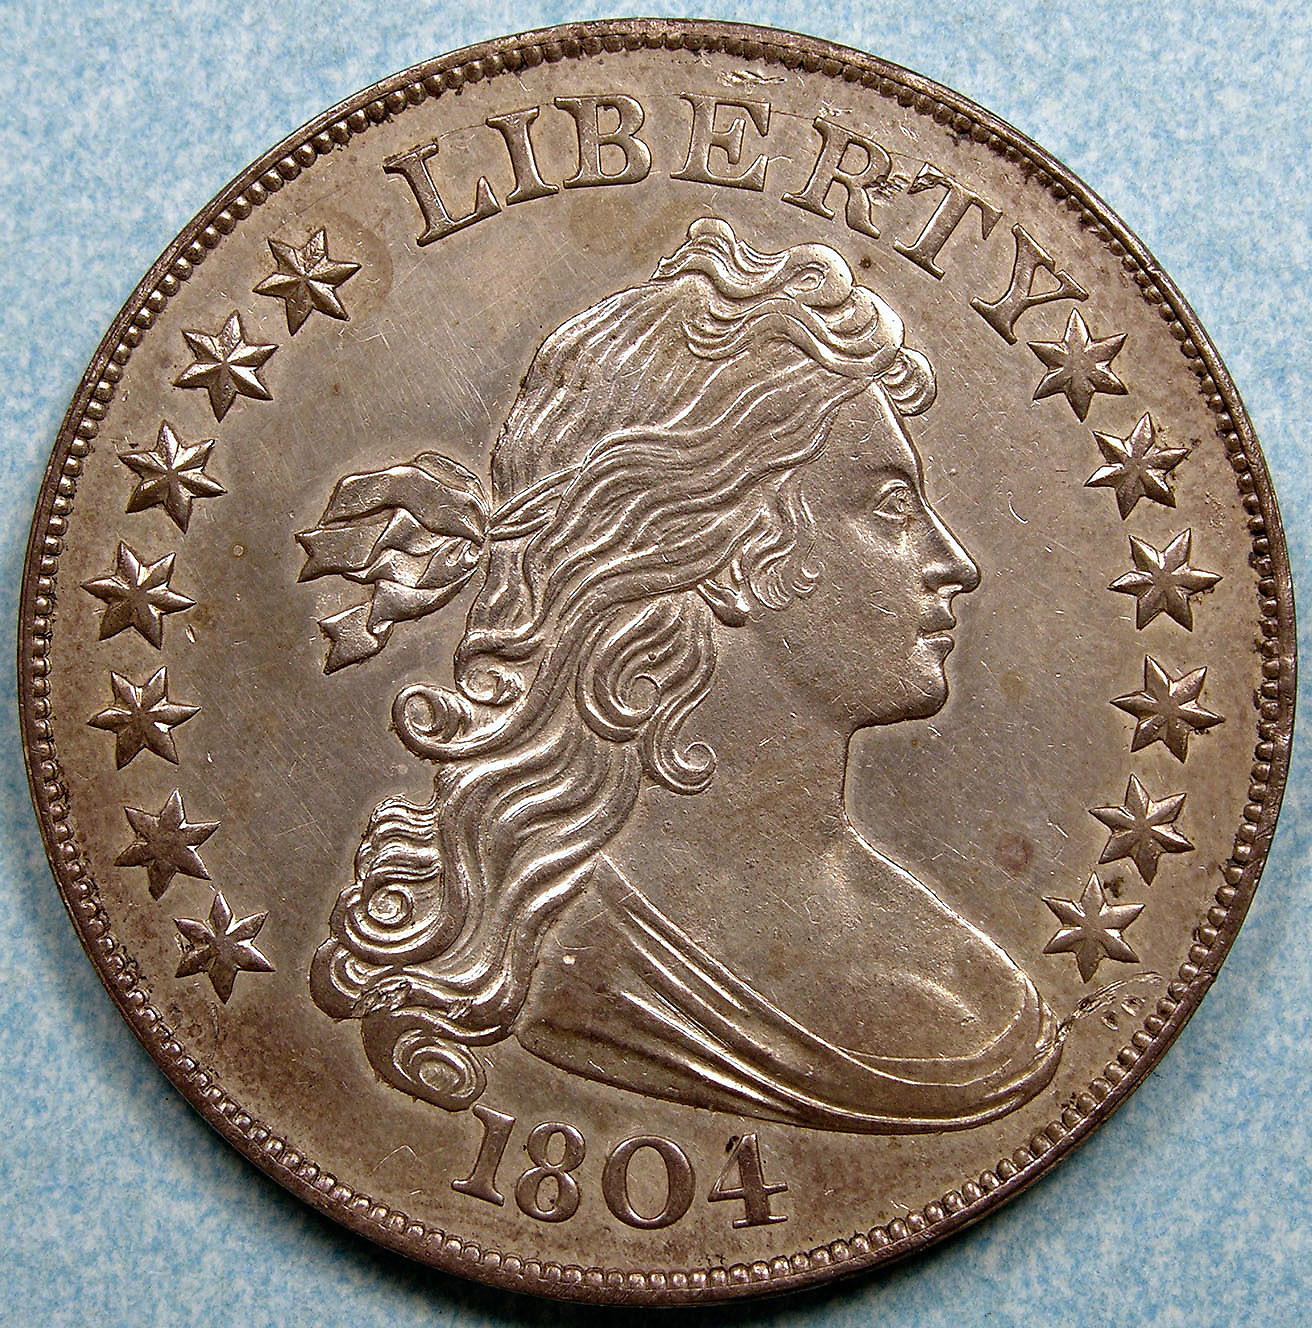 1 серебряный доллар. Монета 1804 Либерти. Серебряный доллар США, 1804 год. Америка монеты 1804. Серебряная монета Либерти 1804.